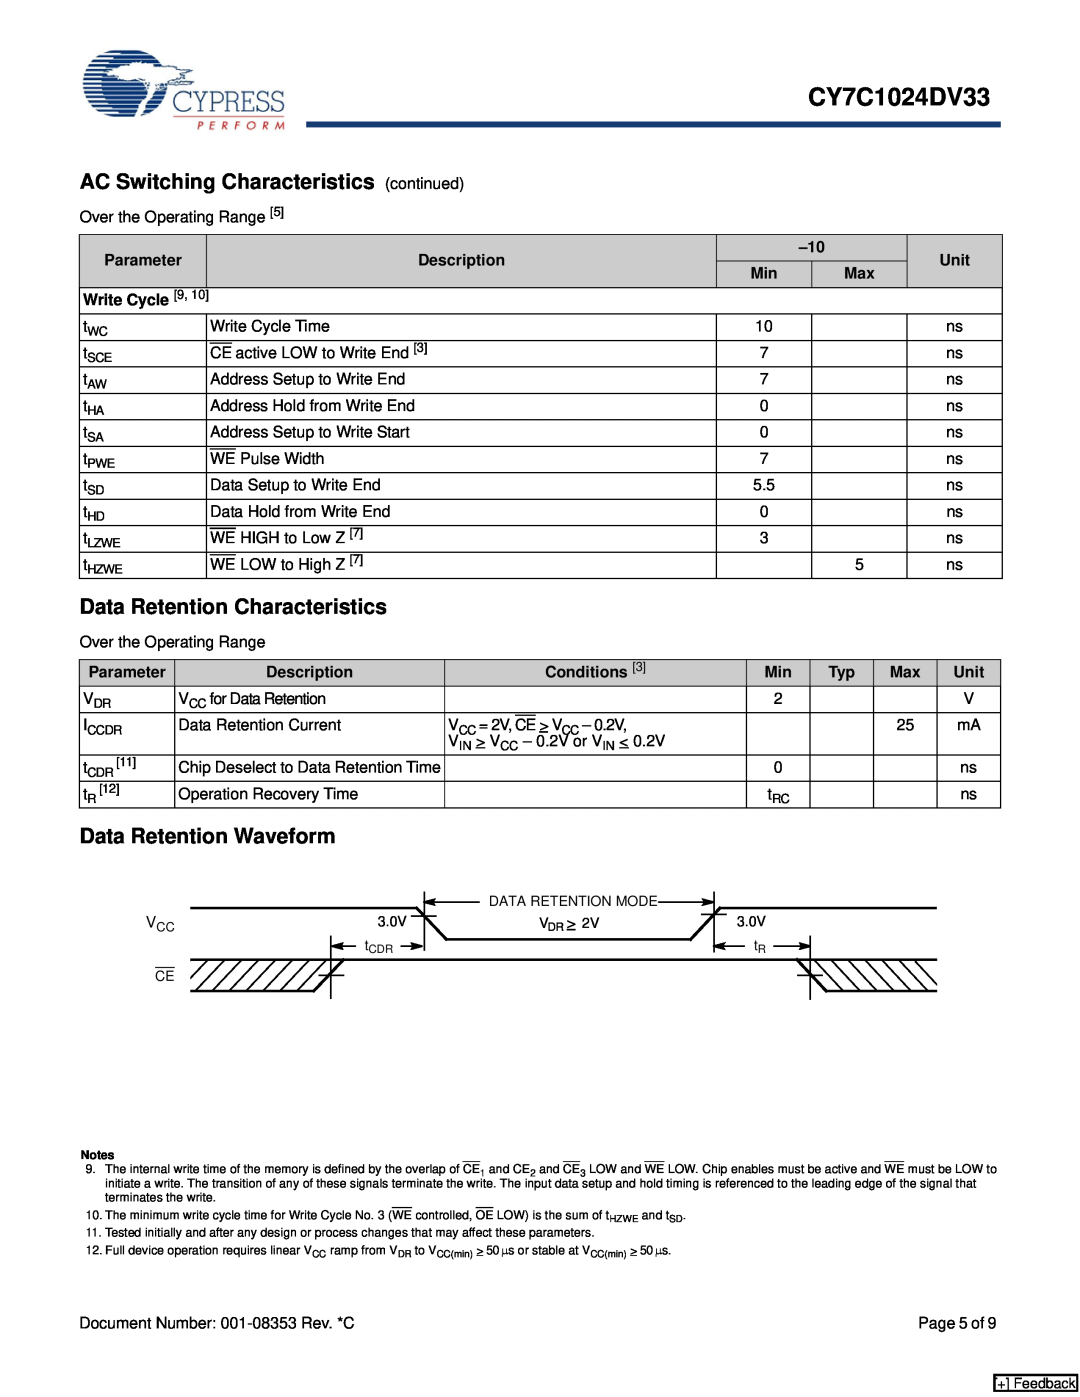 Cypress CY7C1024DV33 AC Switching Characteristics continued, Data Retention Characteristics, Data Retention Waveform, Unit 